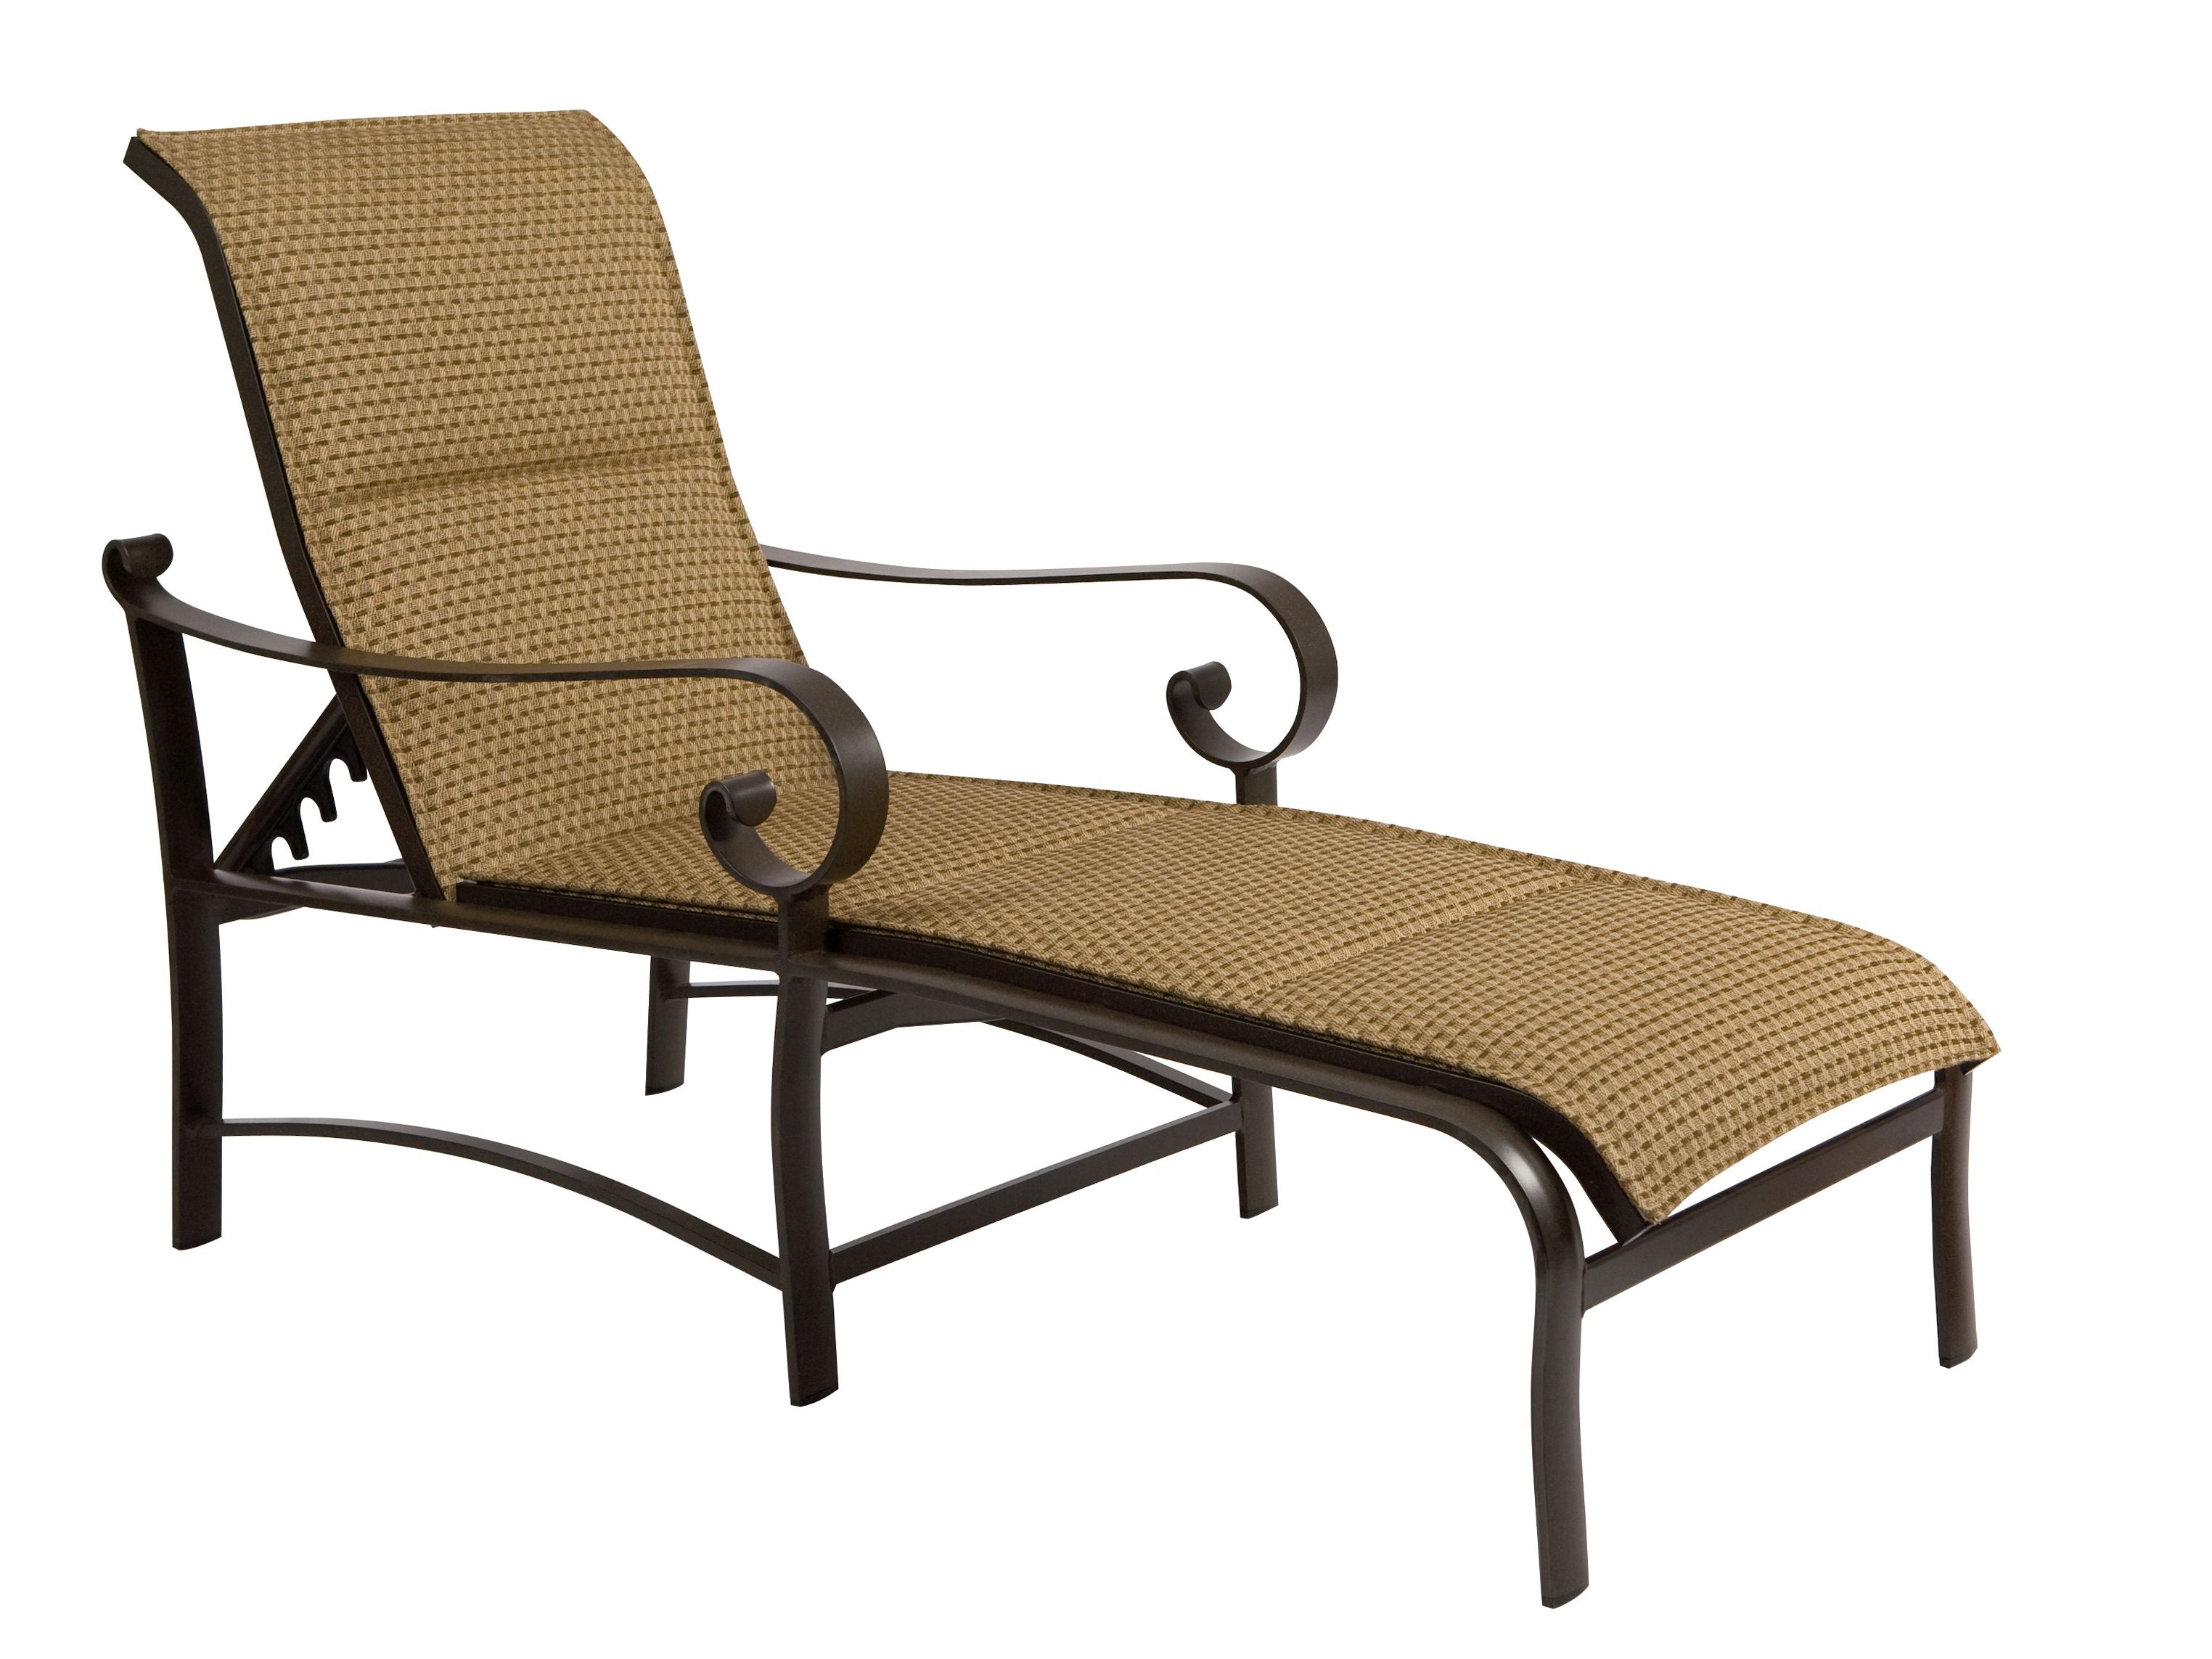 Belden Padded Sling Adjustable Chaise Lounge By Woodard